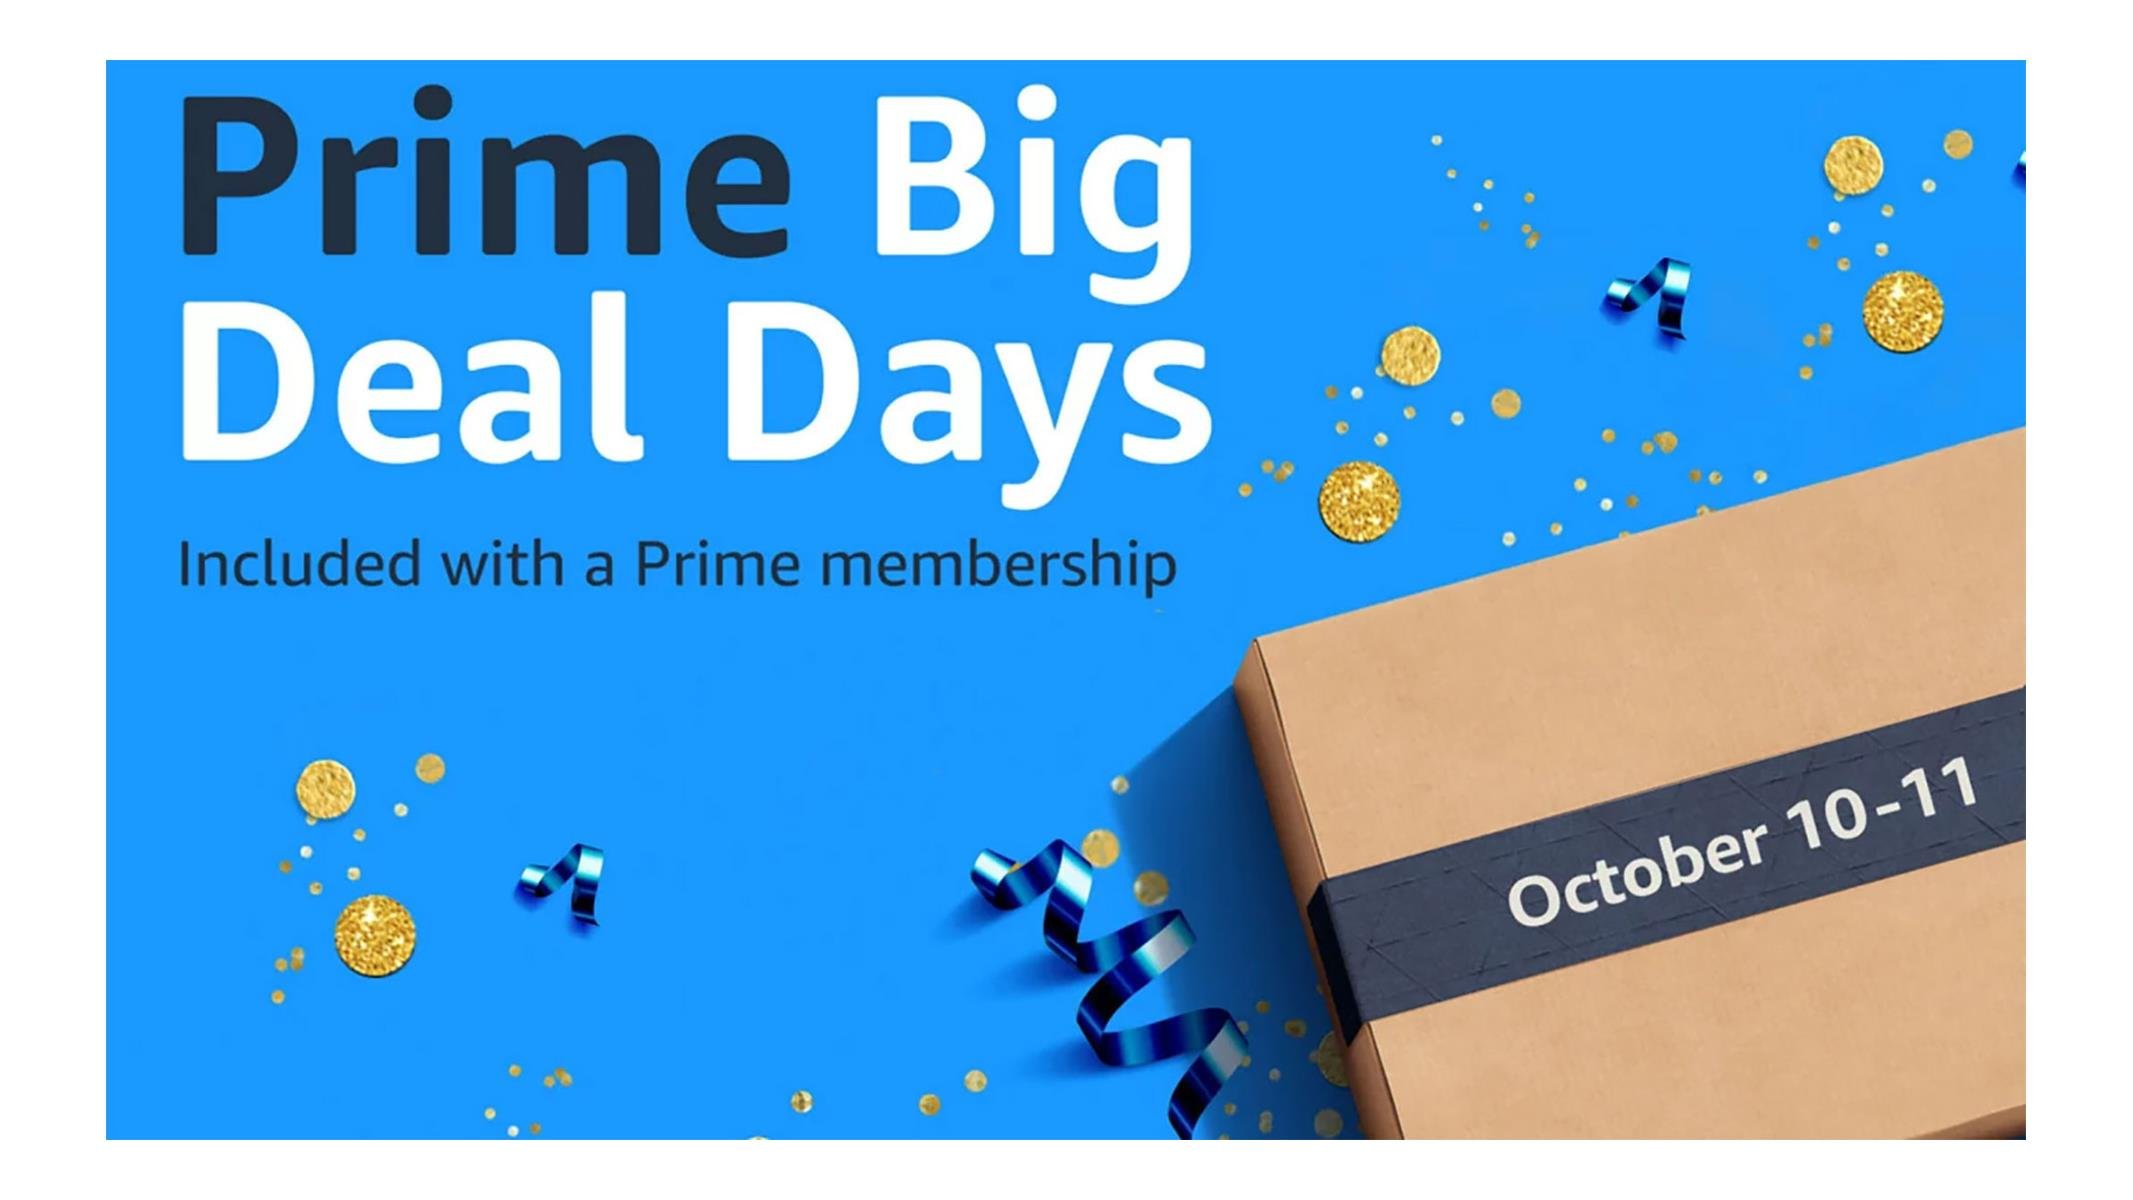 s Prime Big Deal Days event is October 10-11